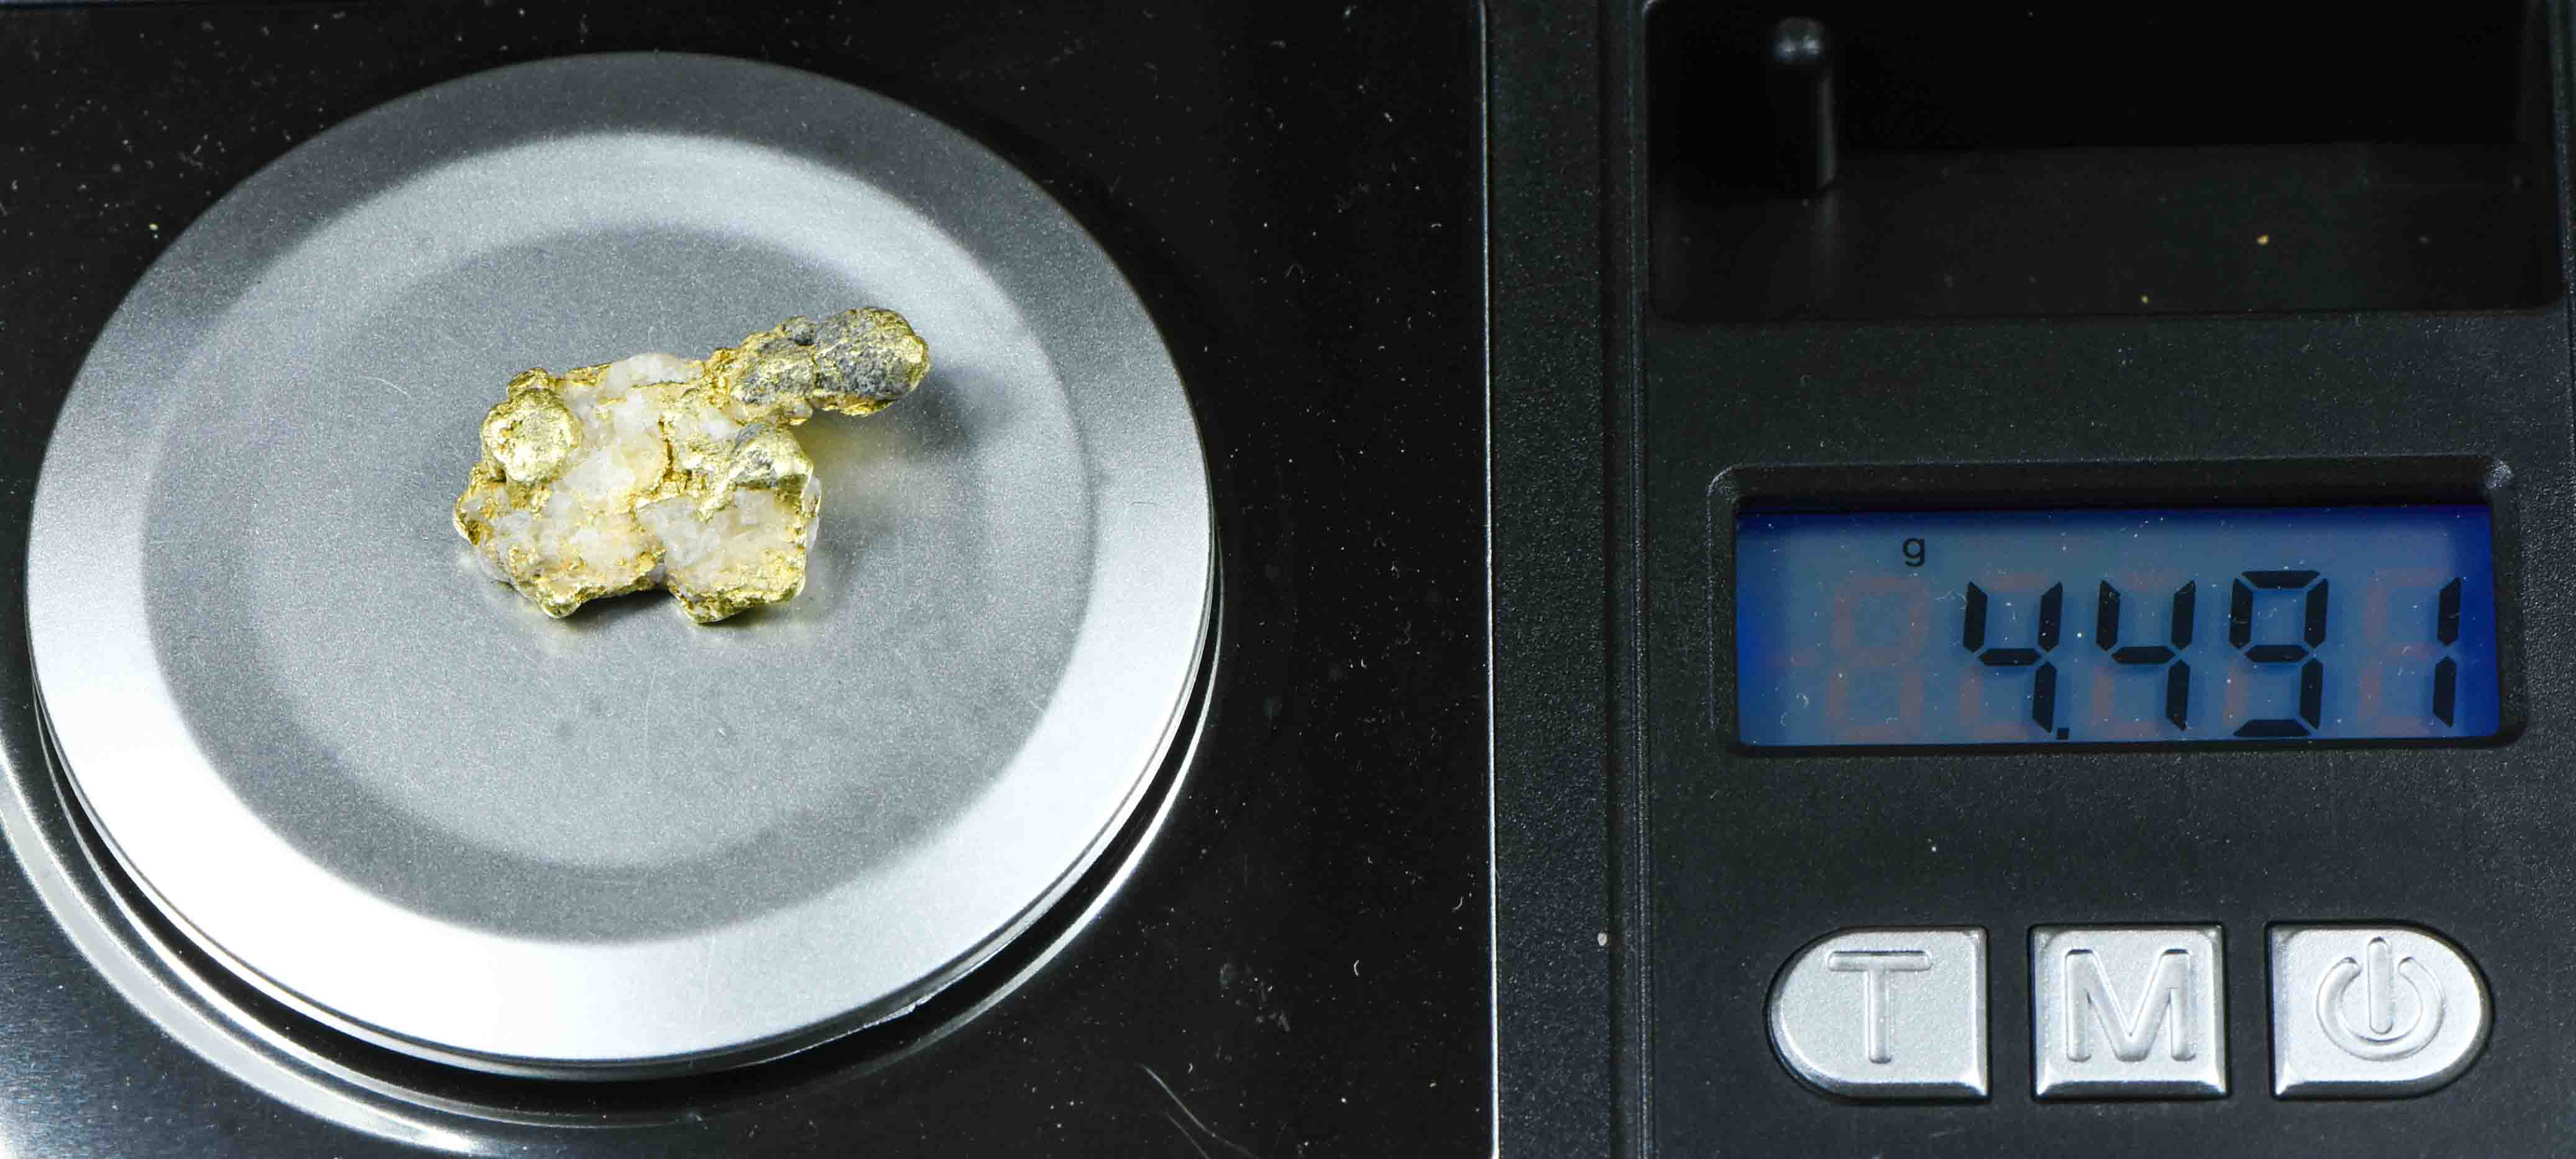 QN-91 "Alaskan BC Gold Nuggets with Quartz" Genuine 4.49 Grams